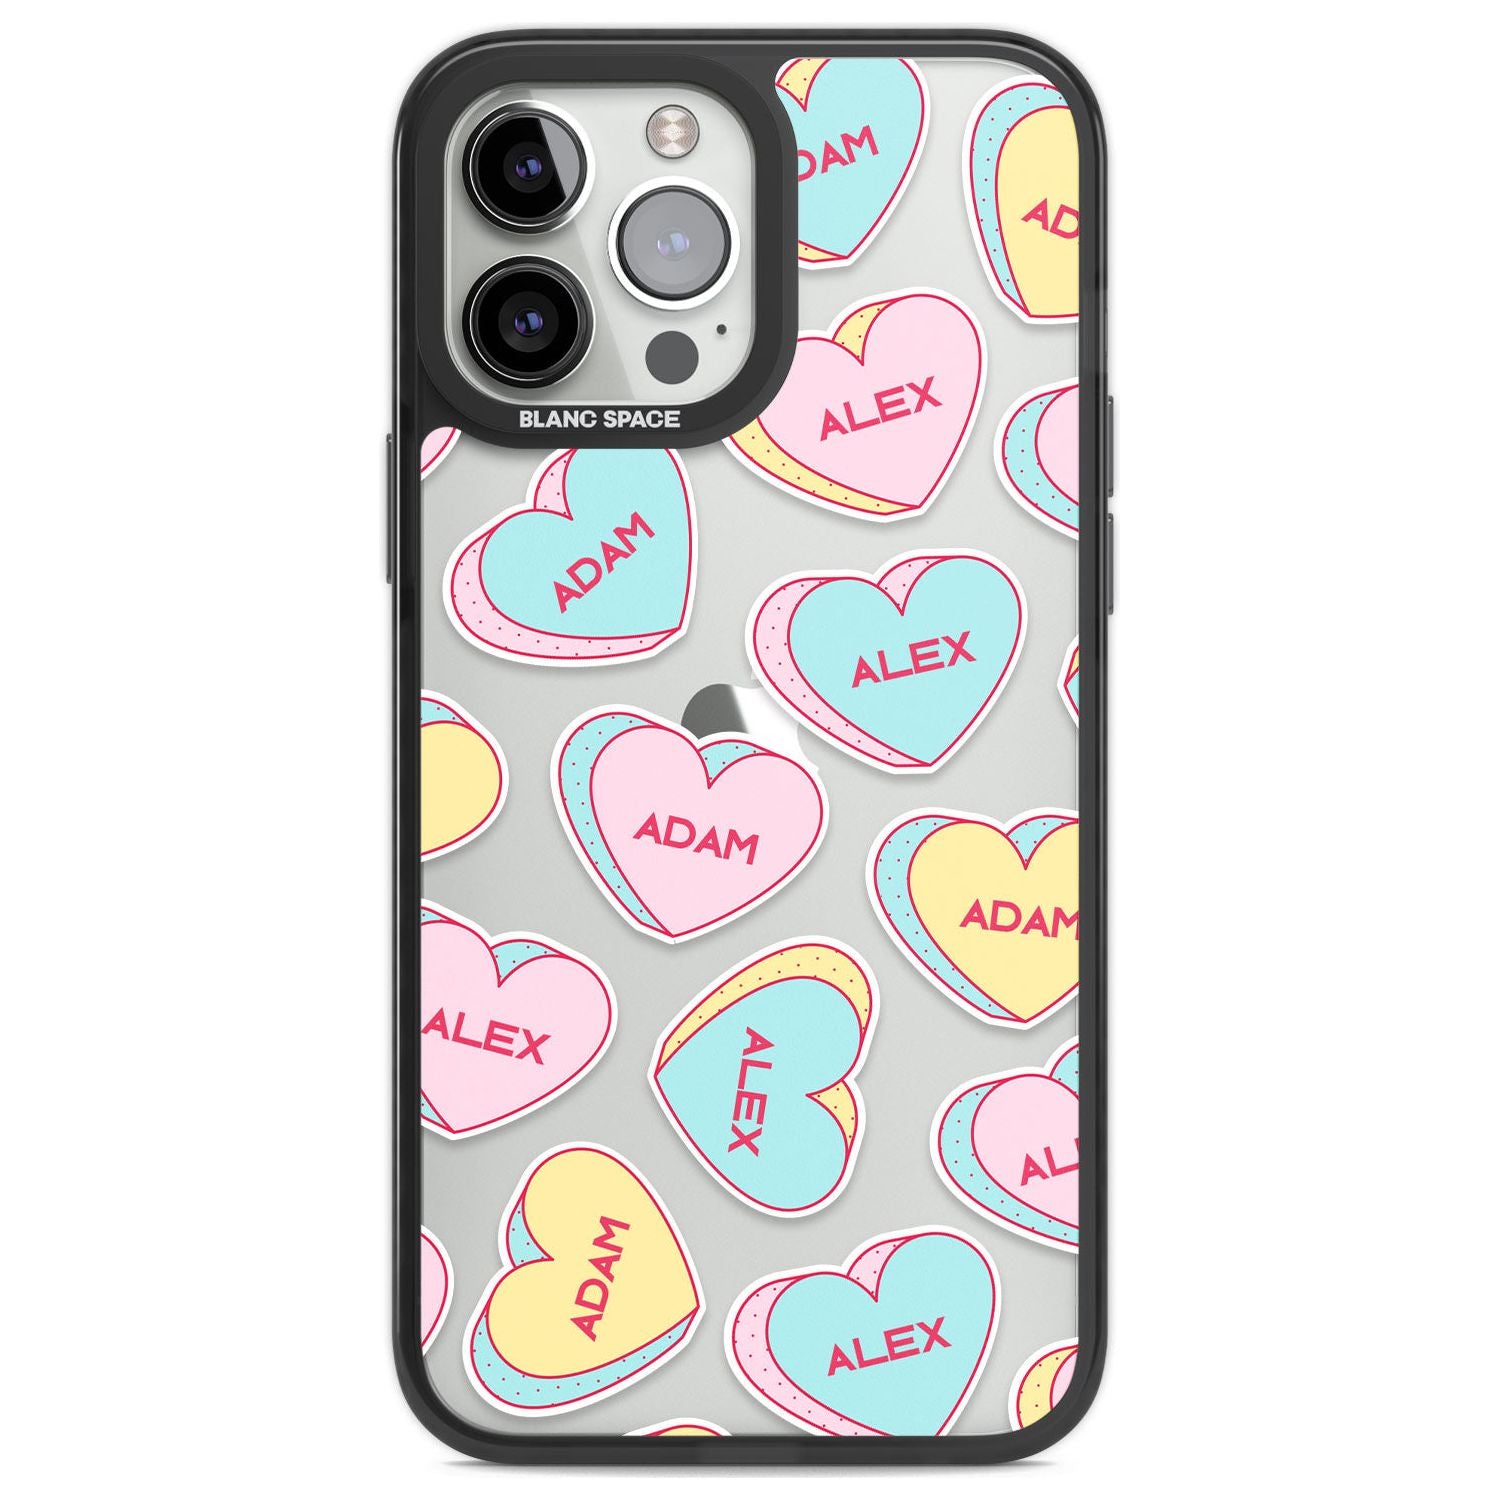 Personalised Text Love Hearts Custom Phone Case iPhone 13 Pro Max / Black Impact Case,iPhone 14 Pro Max / Black Impact Case Blanc Space